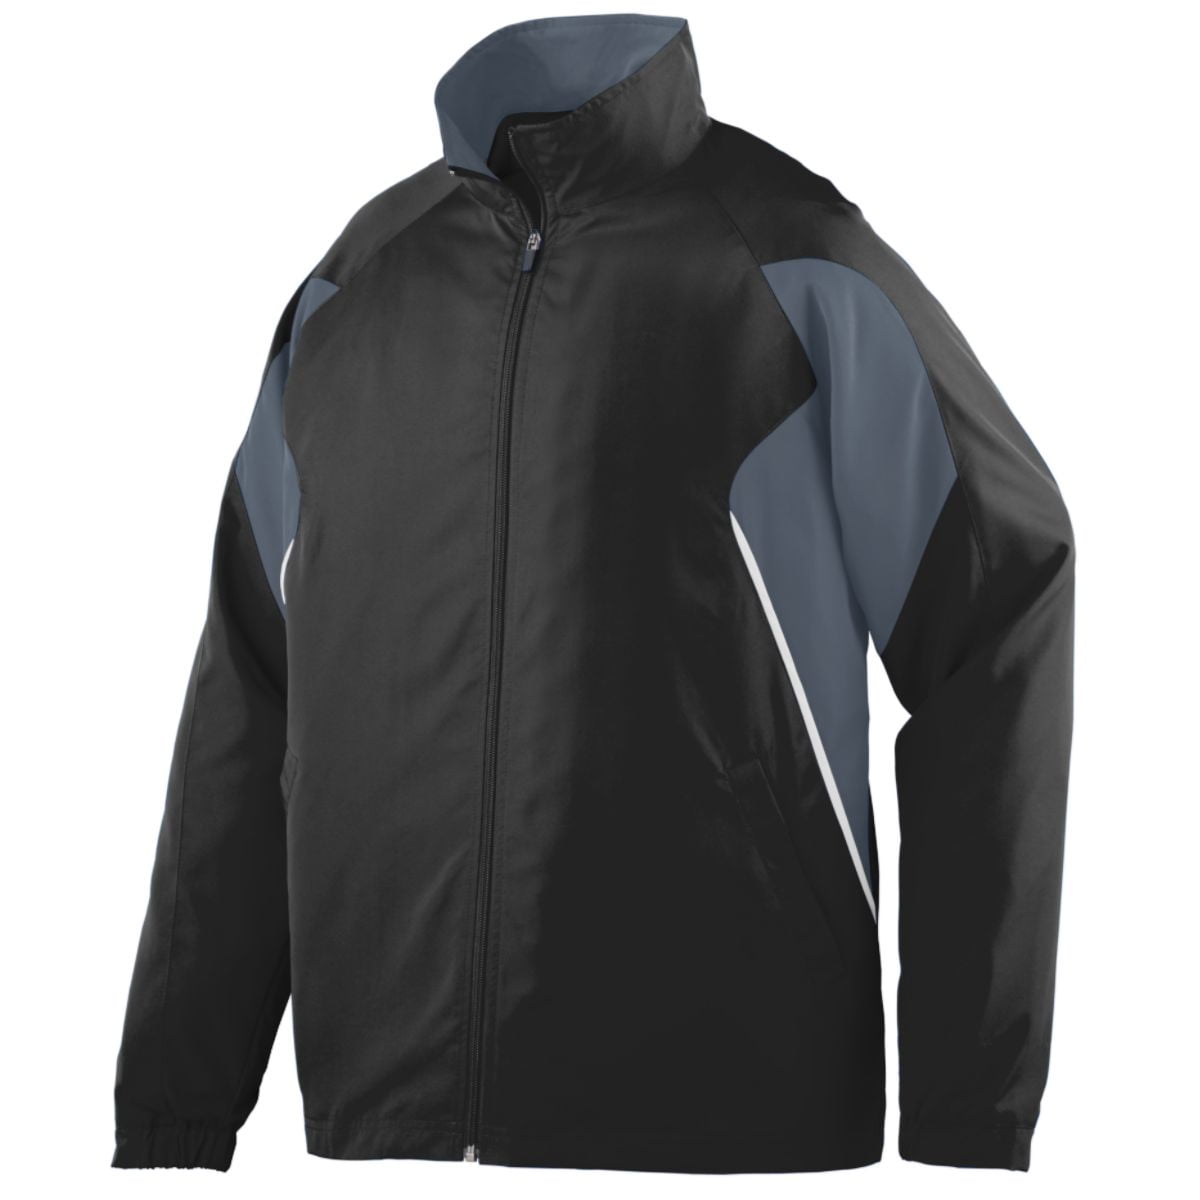 Augusta Sportswear Men's Fury Jacket S Black/Graphite/White | Walmart ...